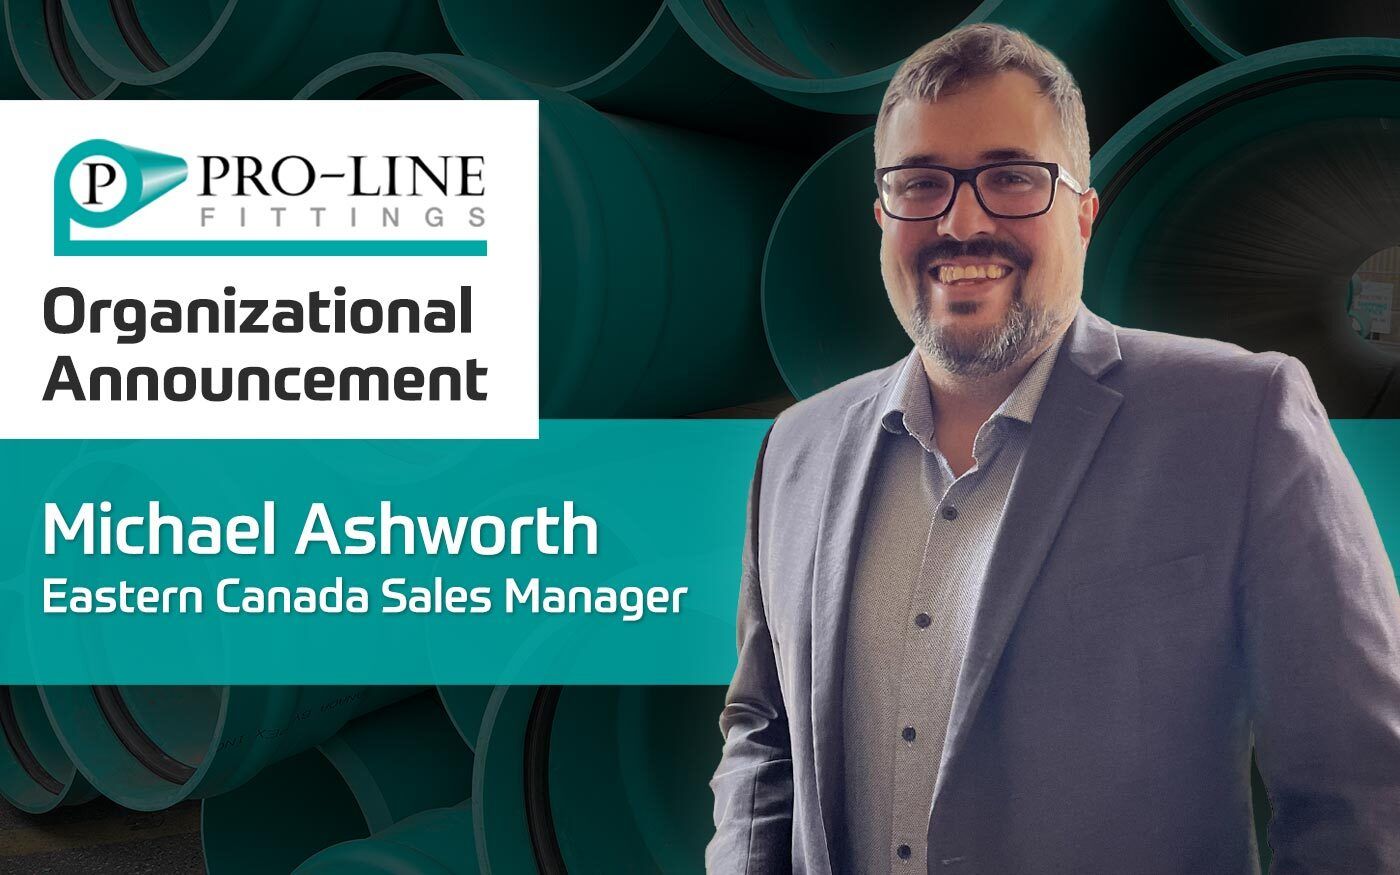 Michael Ashworth, Eastern Canada Sales Manager